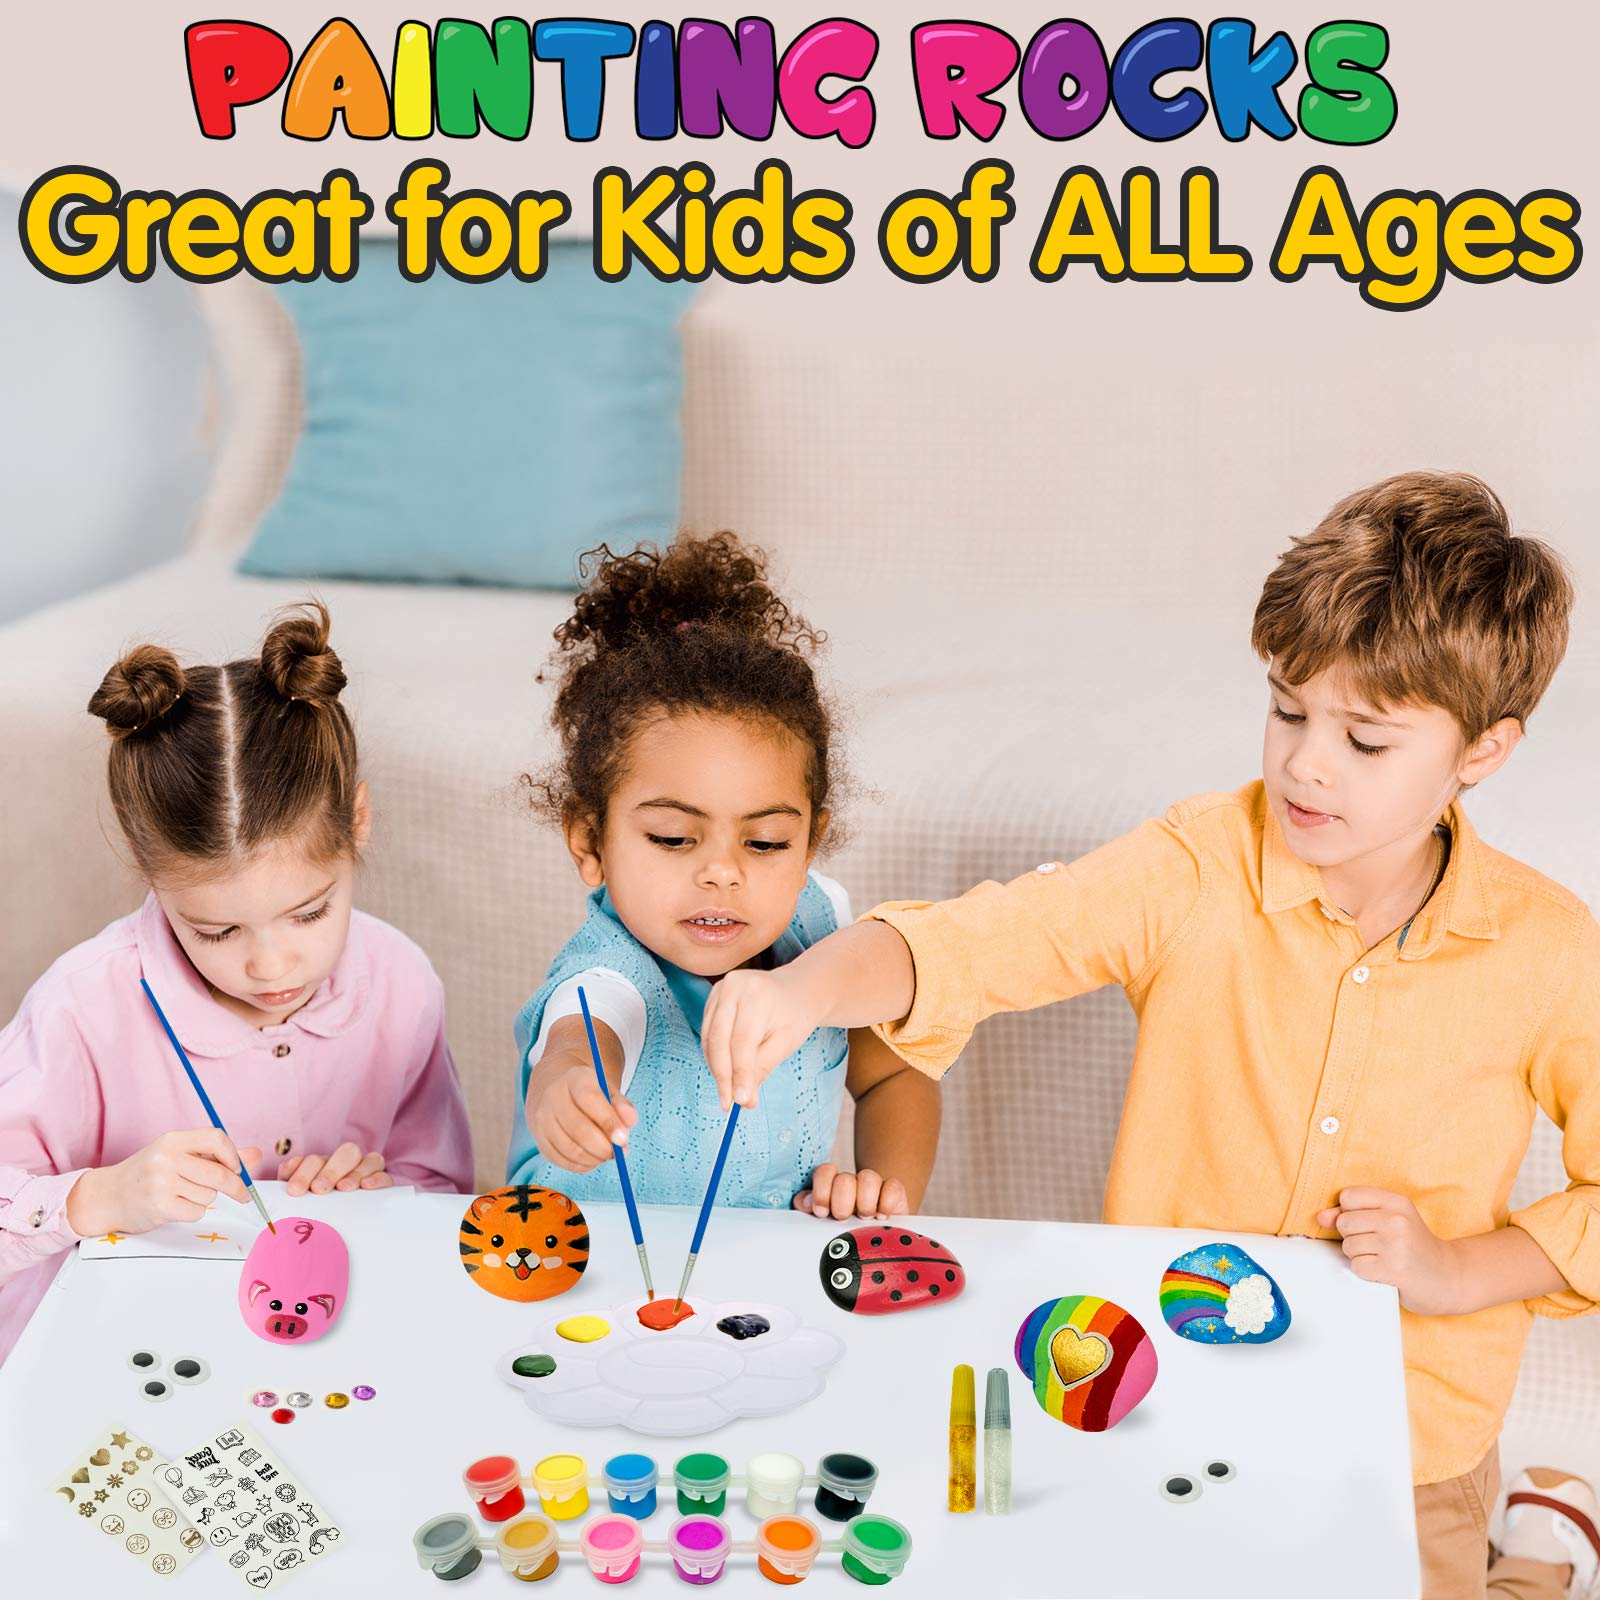 JOYEZA Deluxe Rock Painting Kit, Arts and Crafts for Girls Boys Age 6+ , 12 Rocks, Best Tween Gift Art Set, Waterproof Paints, All-inclusive Craft Kits Art Supplies, Kids Activities Age 4 5 6 7 8 9 10